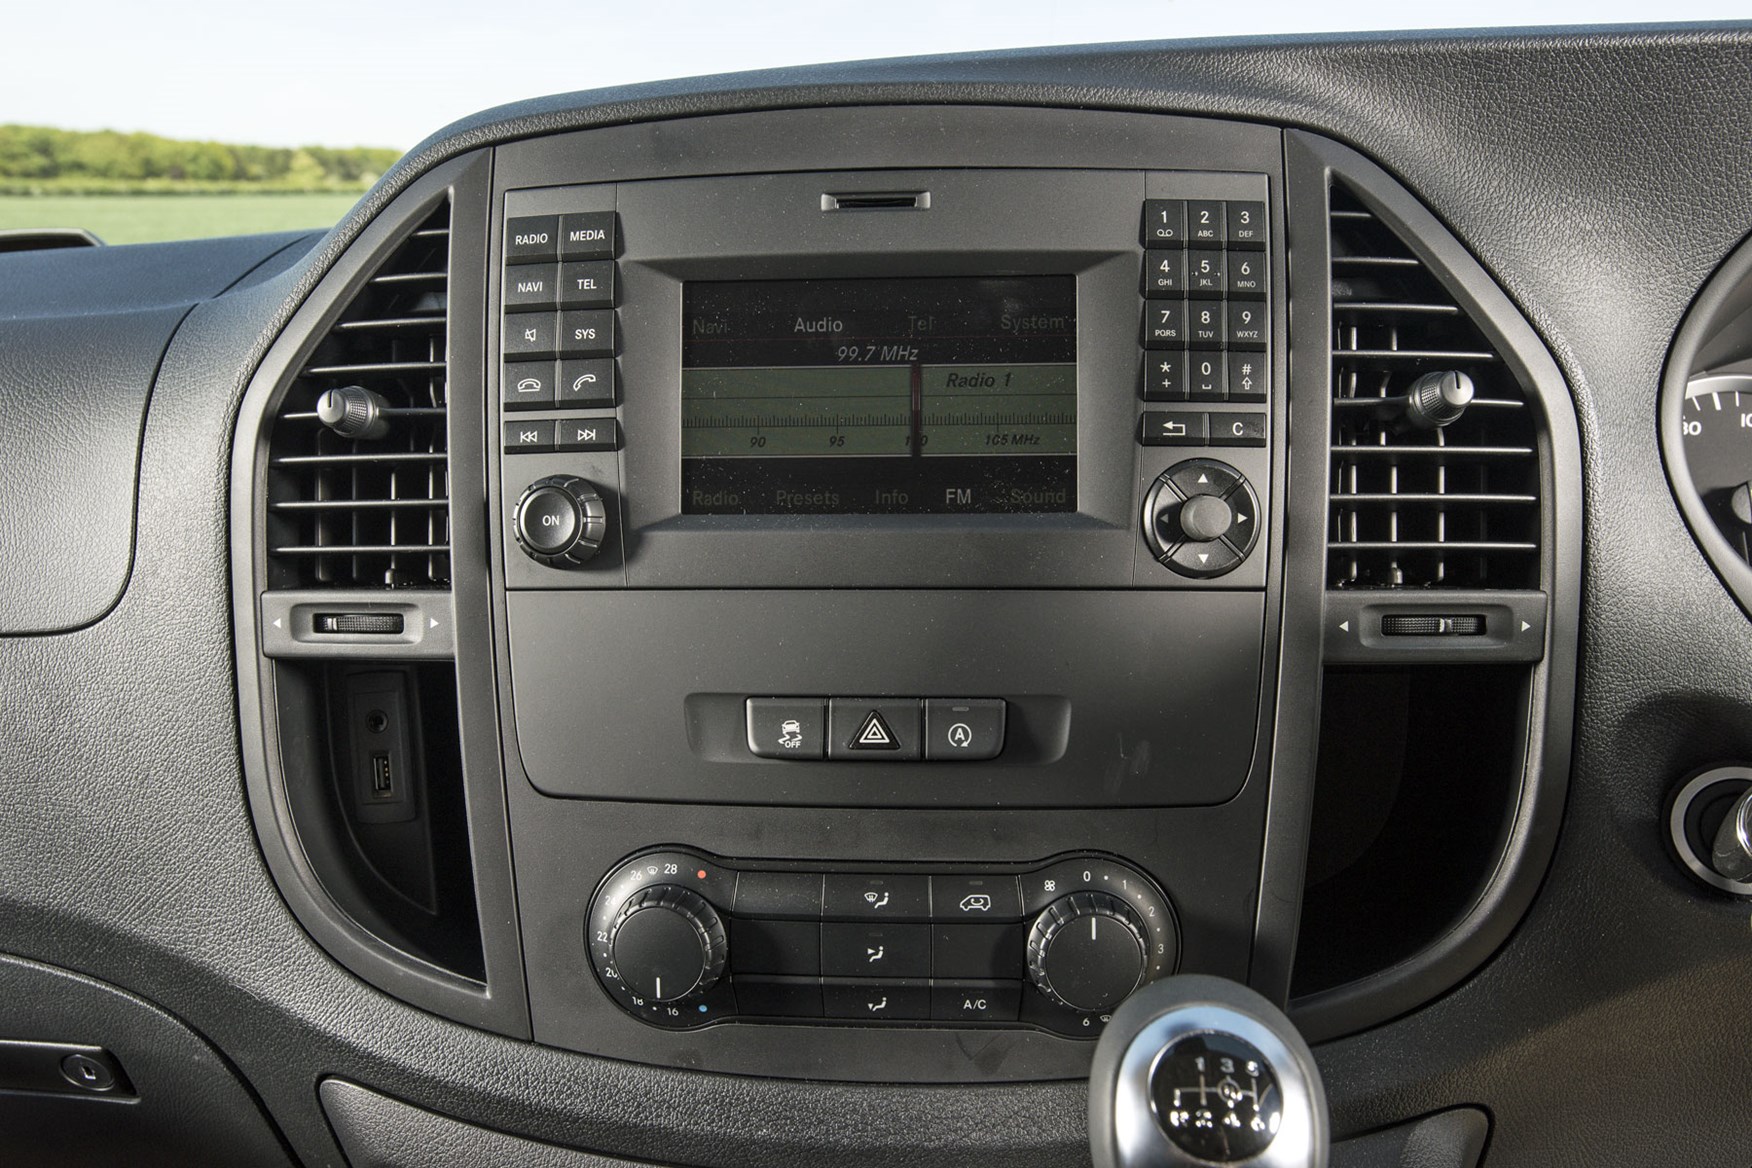 Mercedes Vito Premium review - Audio 15 infotainment system